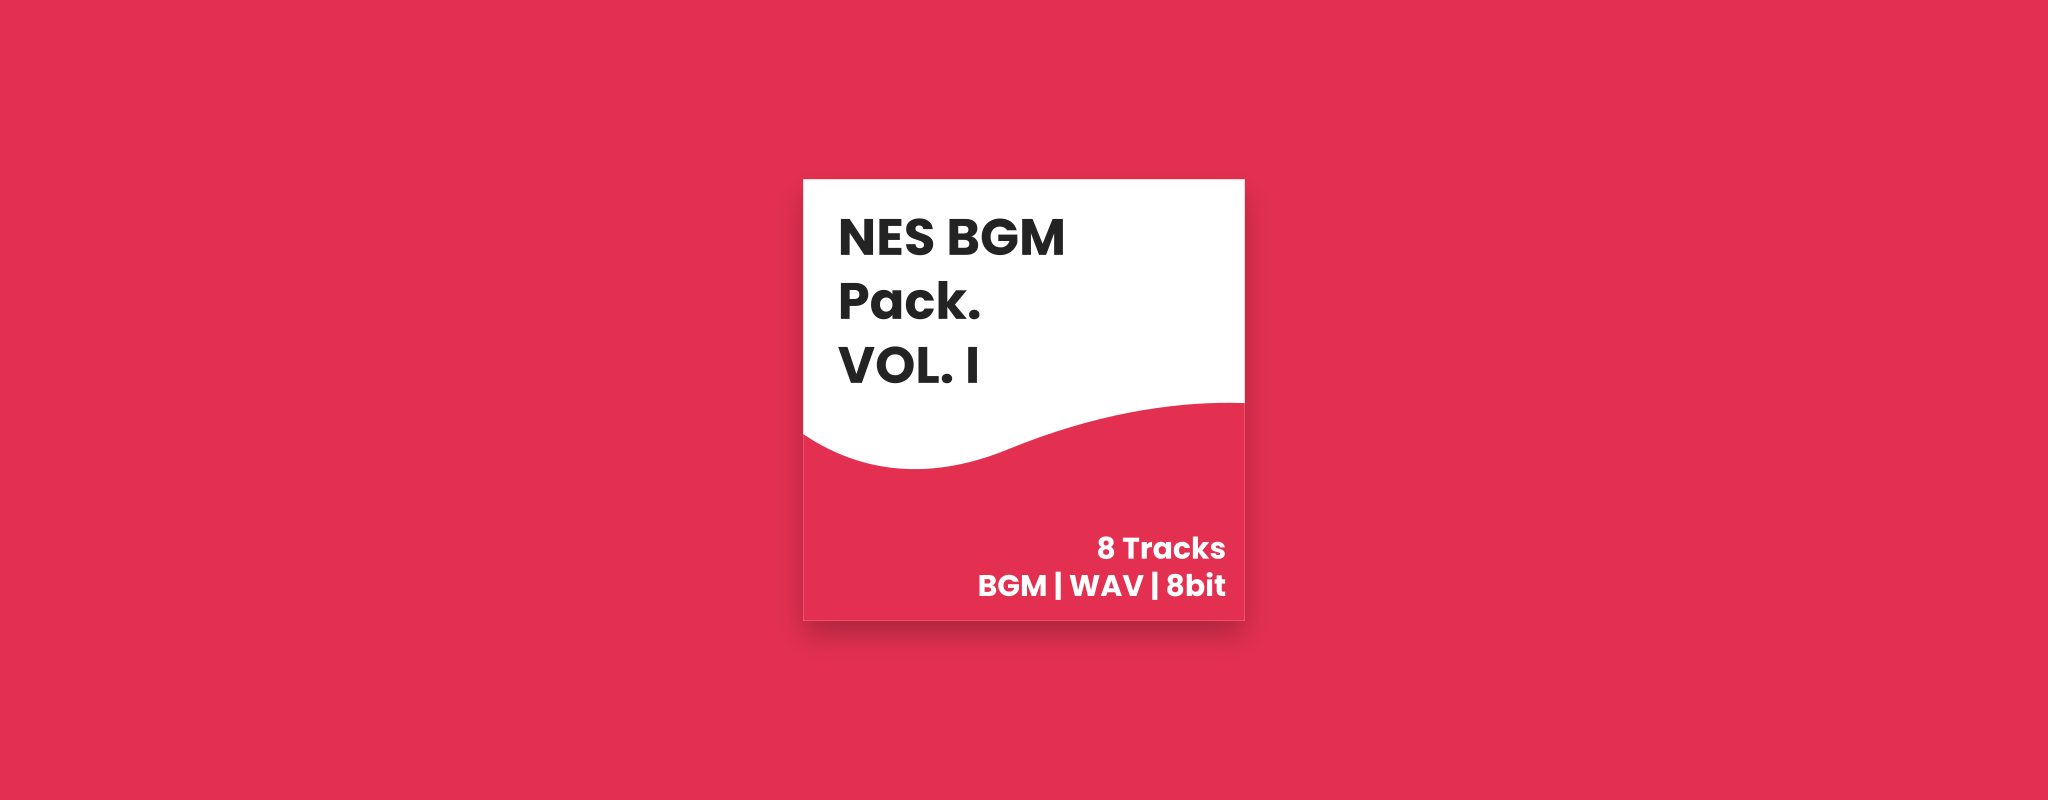 NES BGM Pack, Vol 1